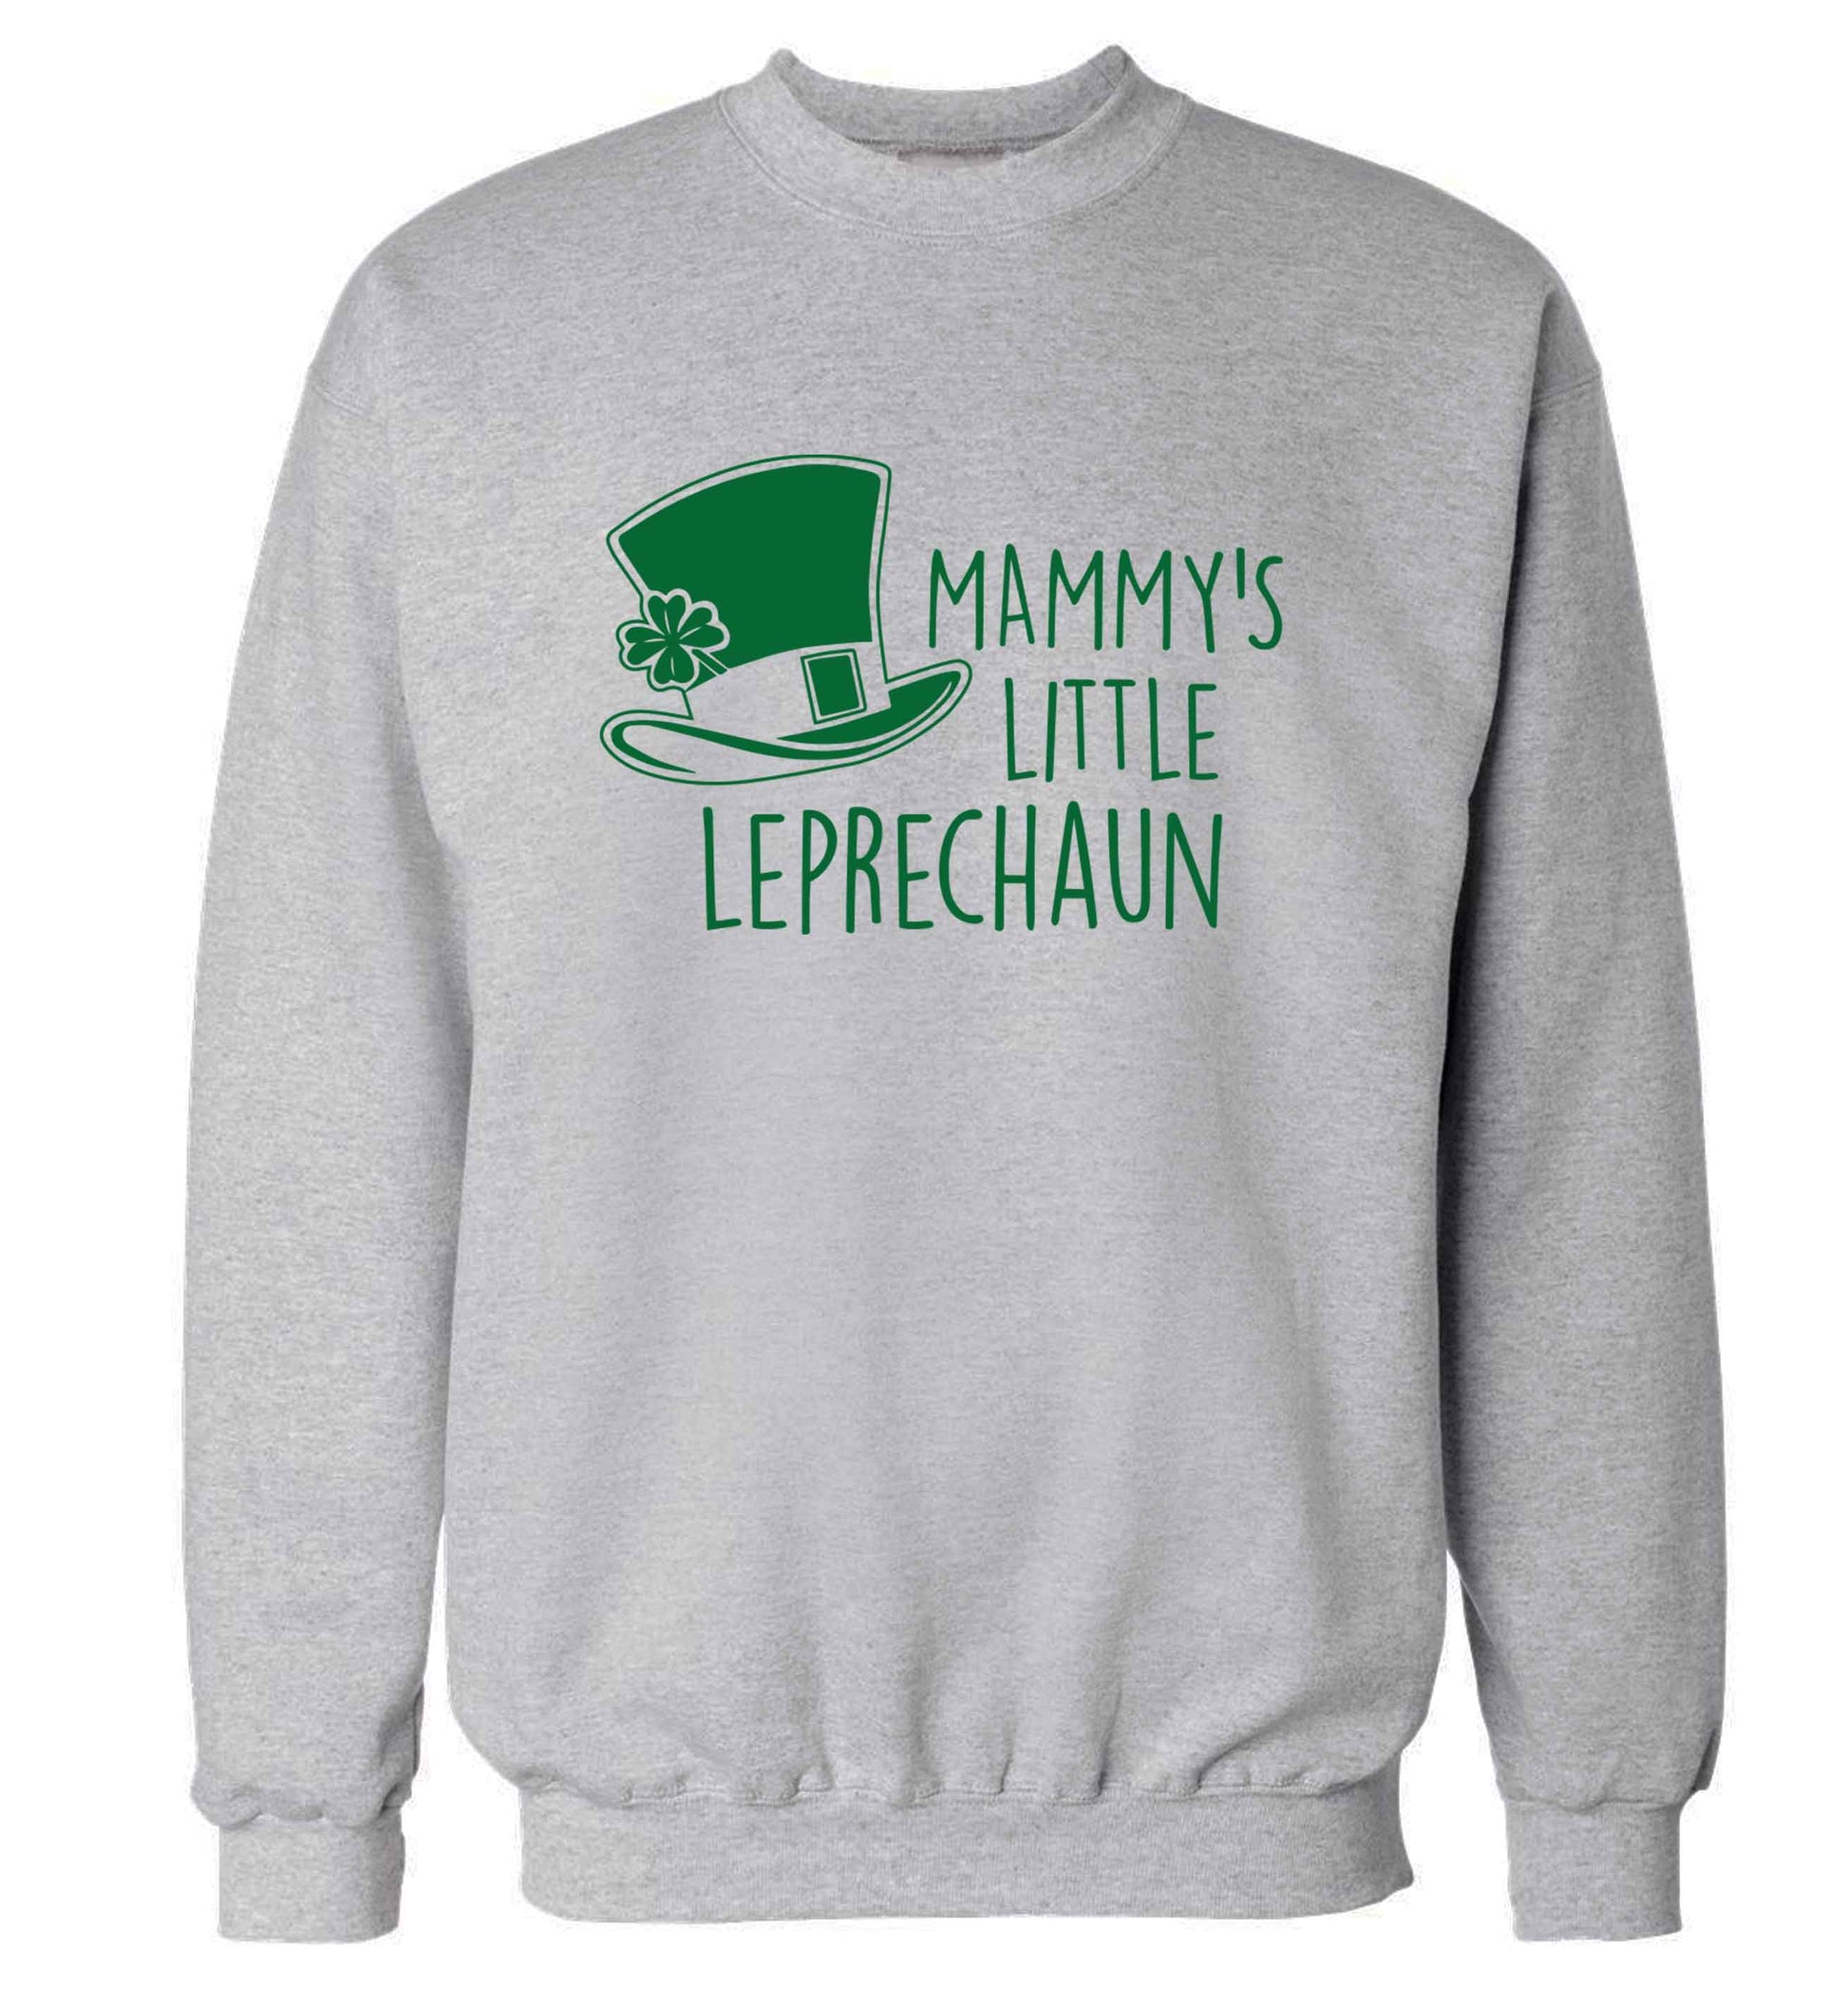 Mammy's little leprechaun adult's unisex grey sweater 2XL